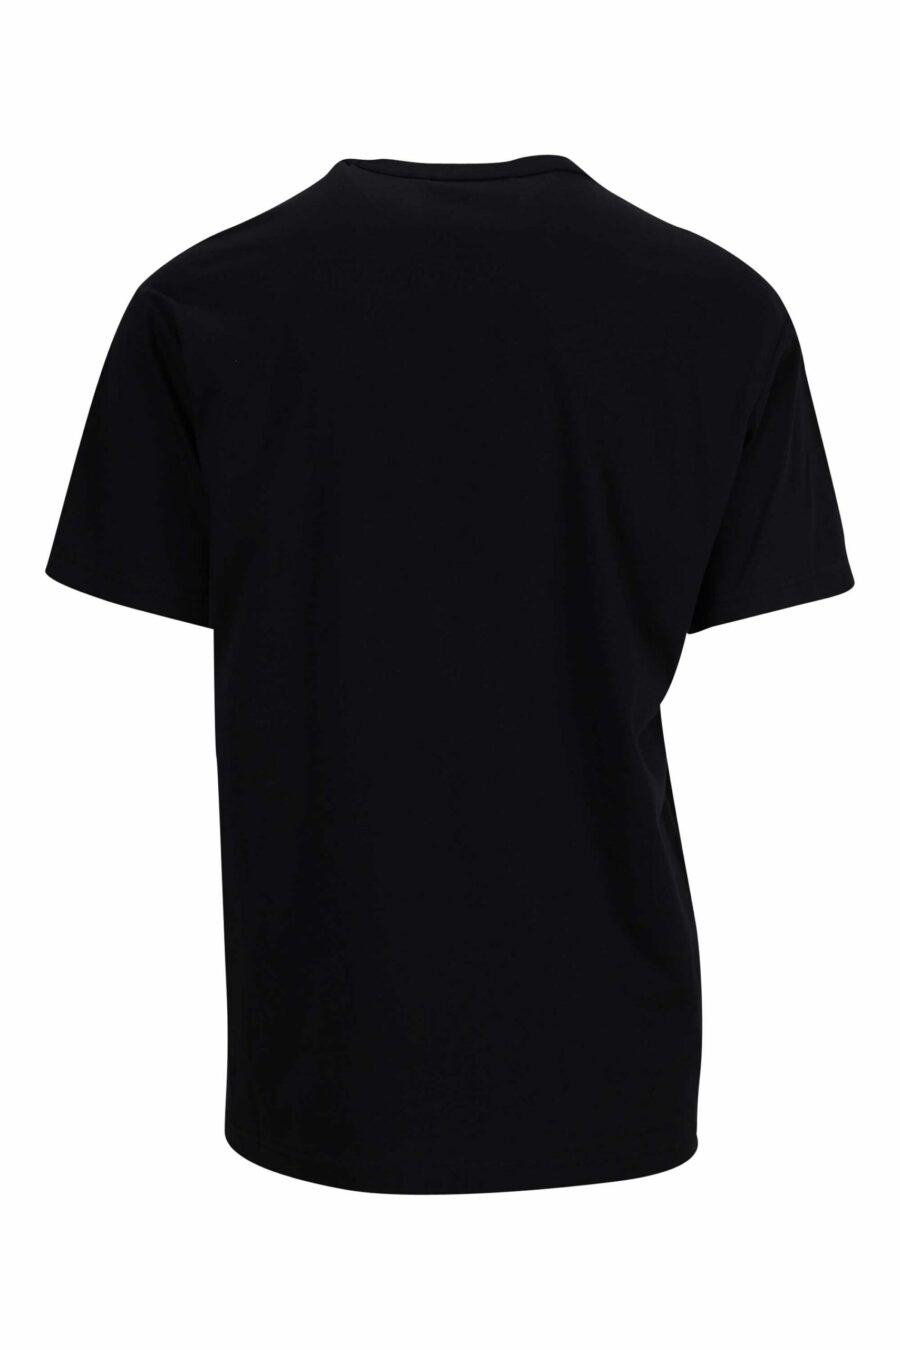 Schwarzes T-Shirt mit goldenem kreisförmigem maxilogo "Emblem" - 8052019338058 1 skaliert